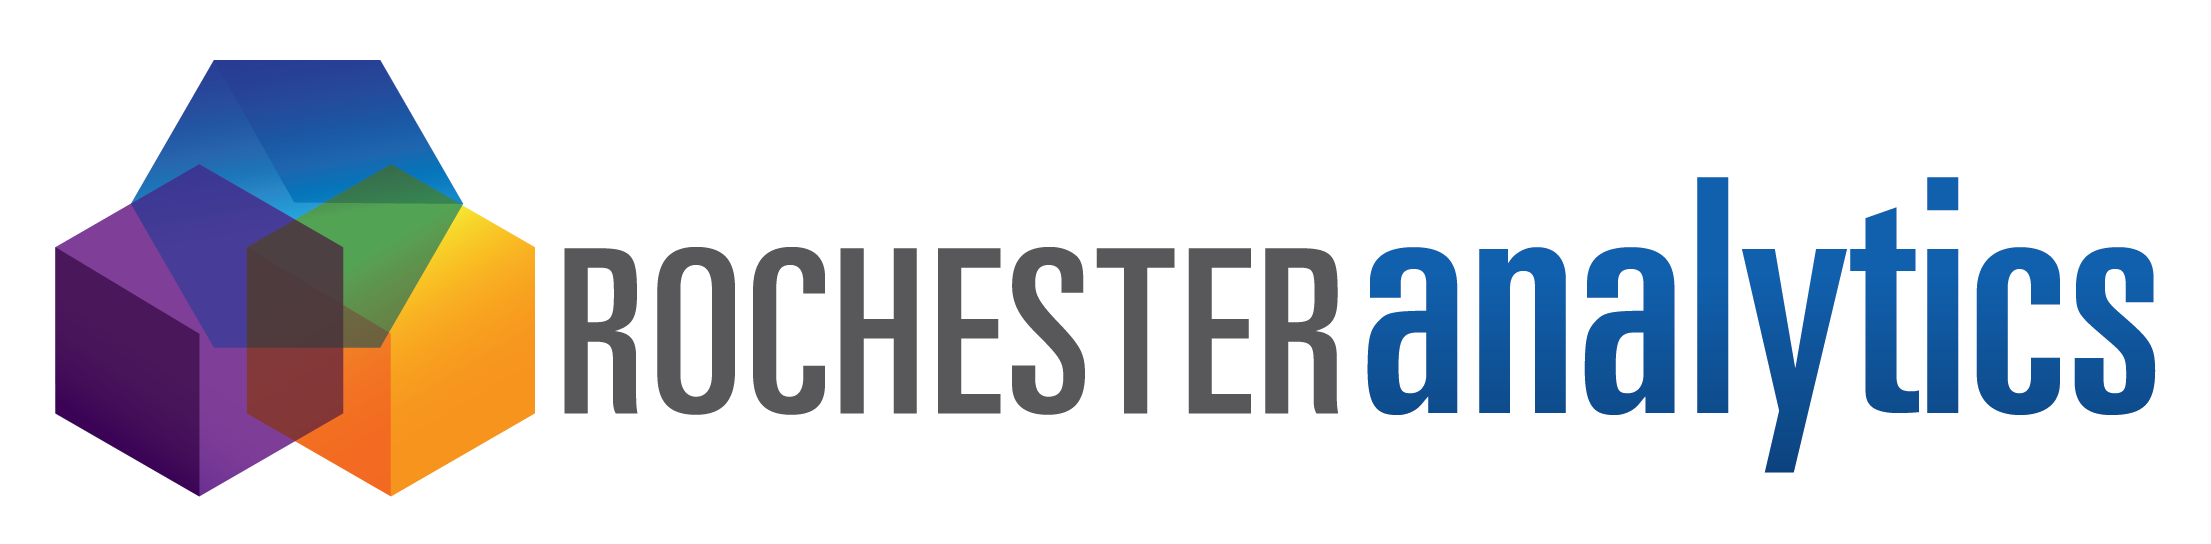 Rochester Analytics Logo